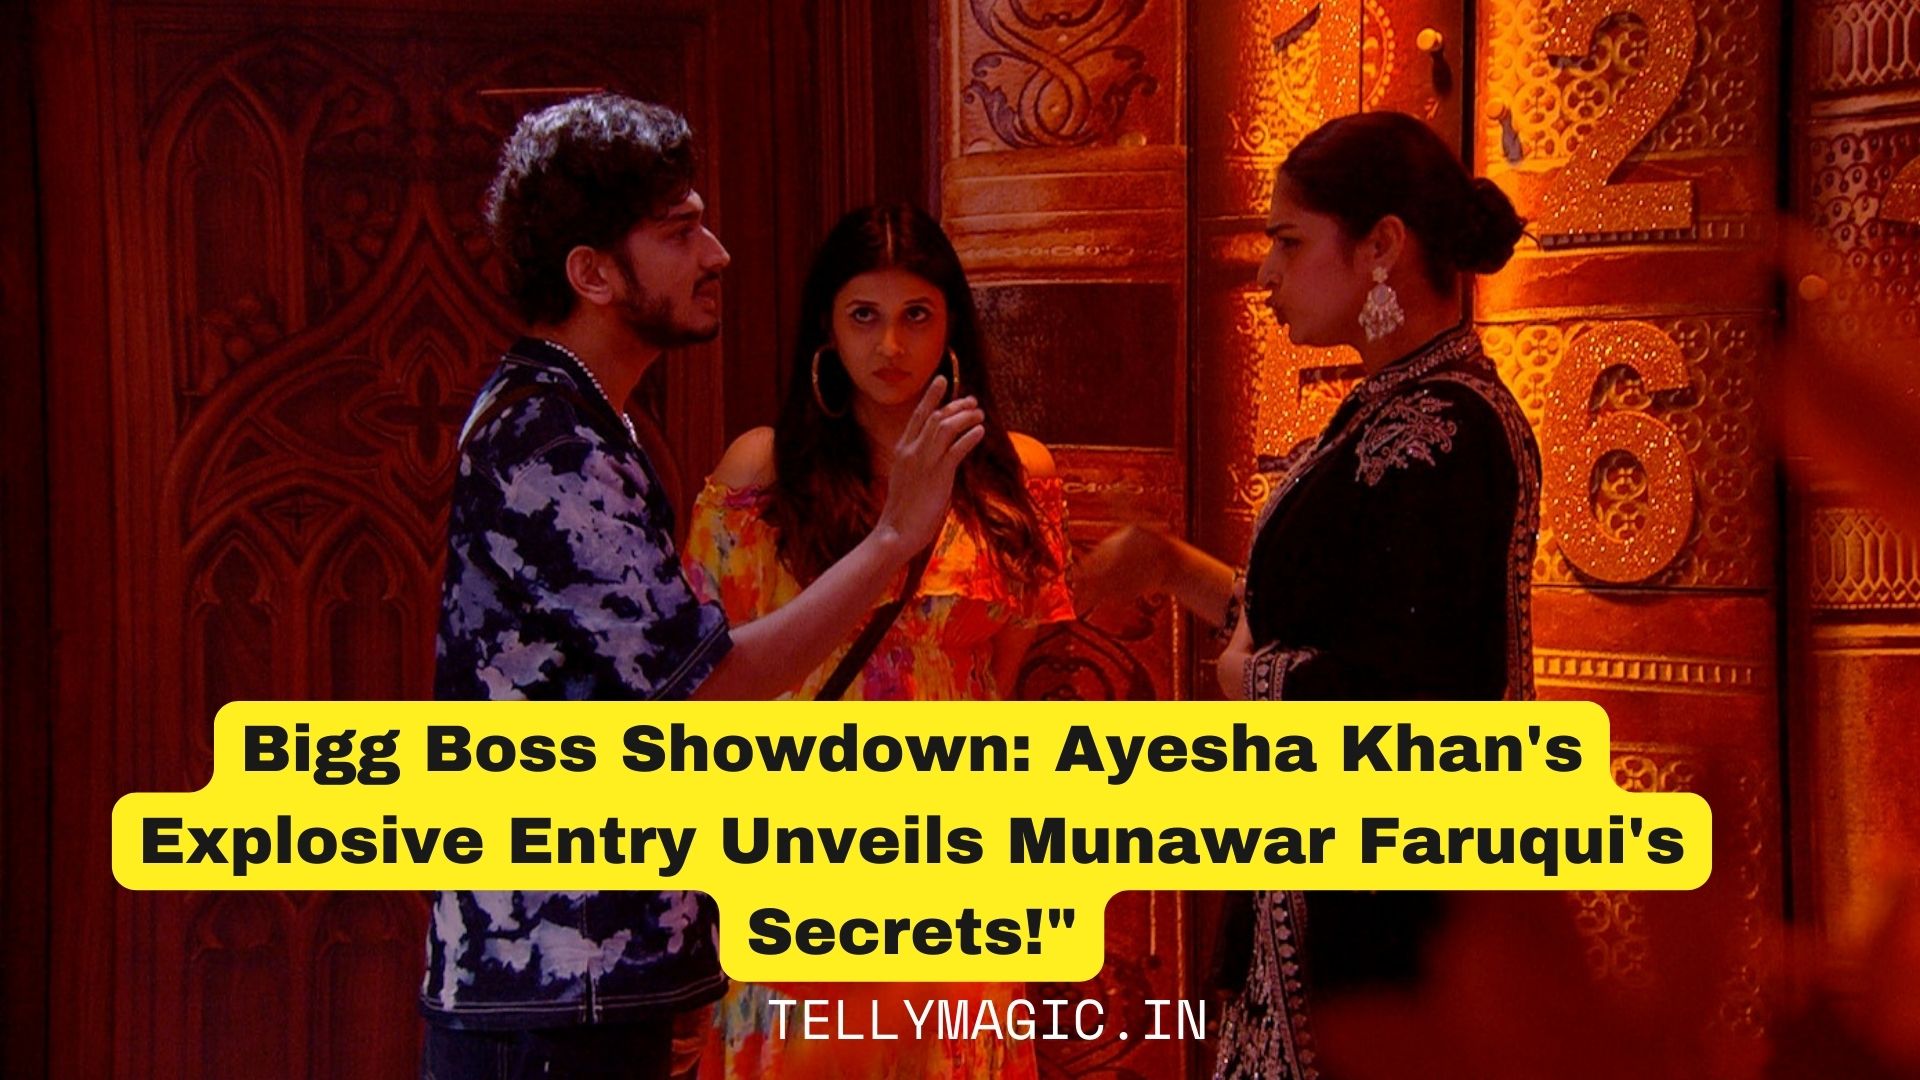 Bigg Boss Showdown: Ayesha Khan’s Explosive Entry Unveils Munawar Faruqui’s Secrets!”